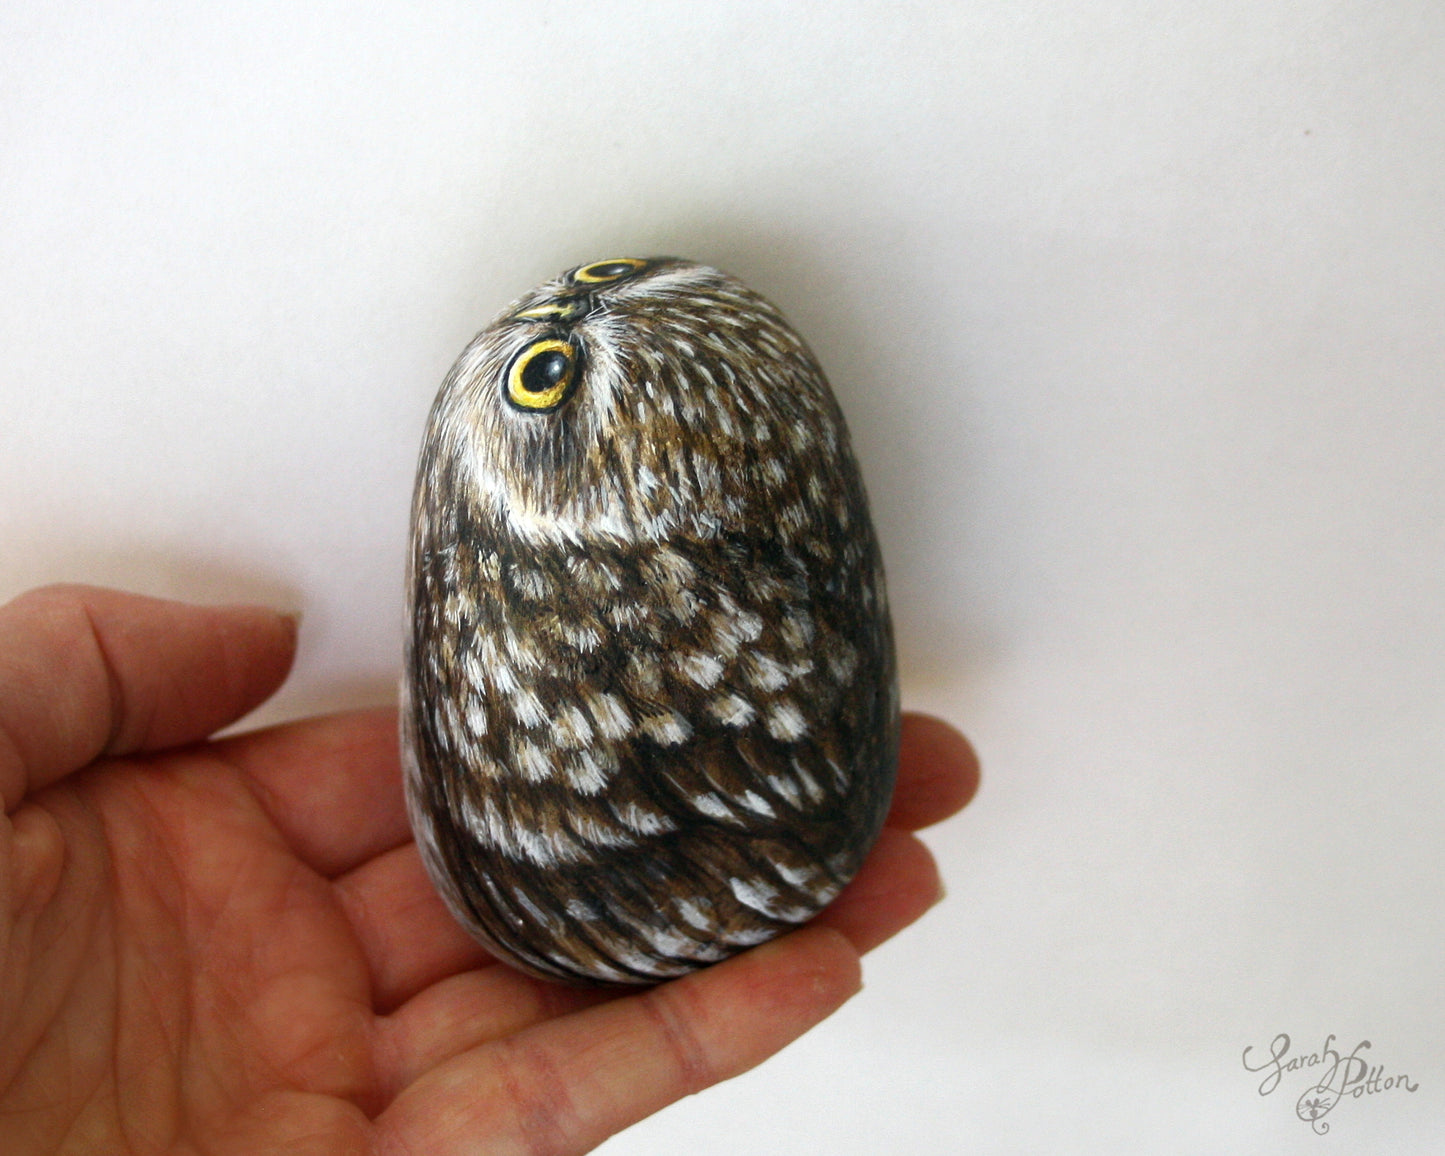 Painted Rock - NZ Little Owl